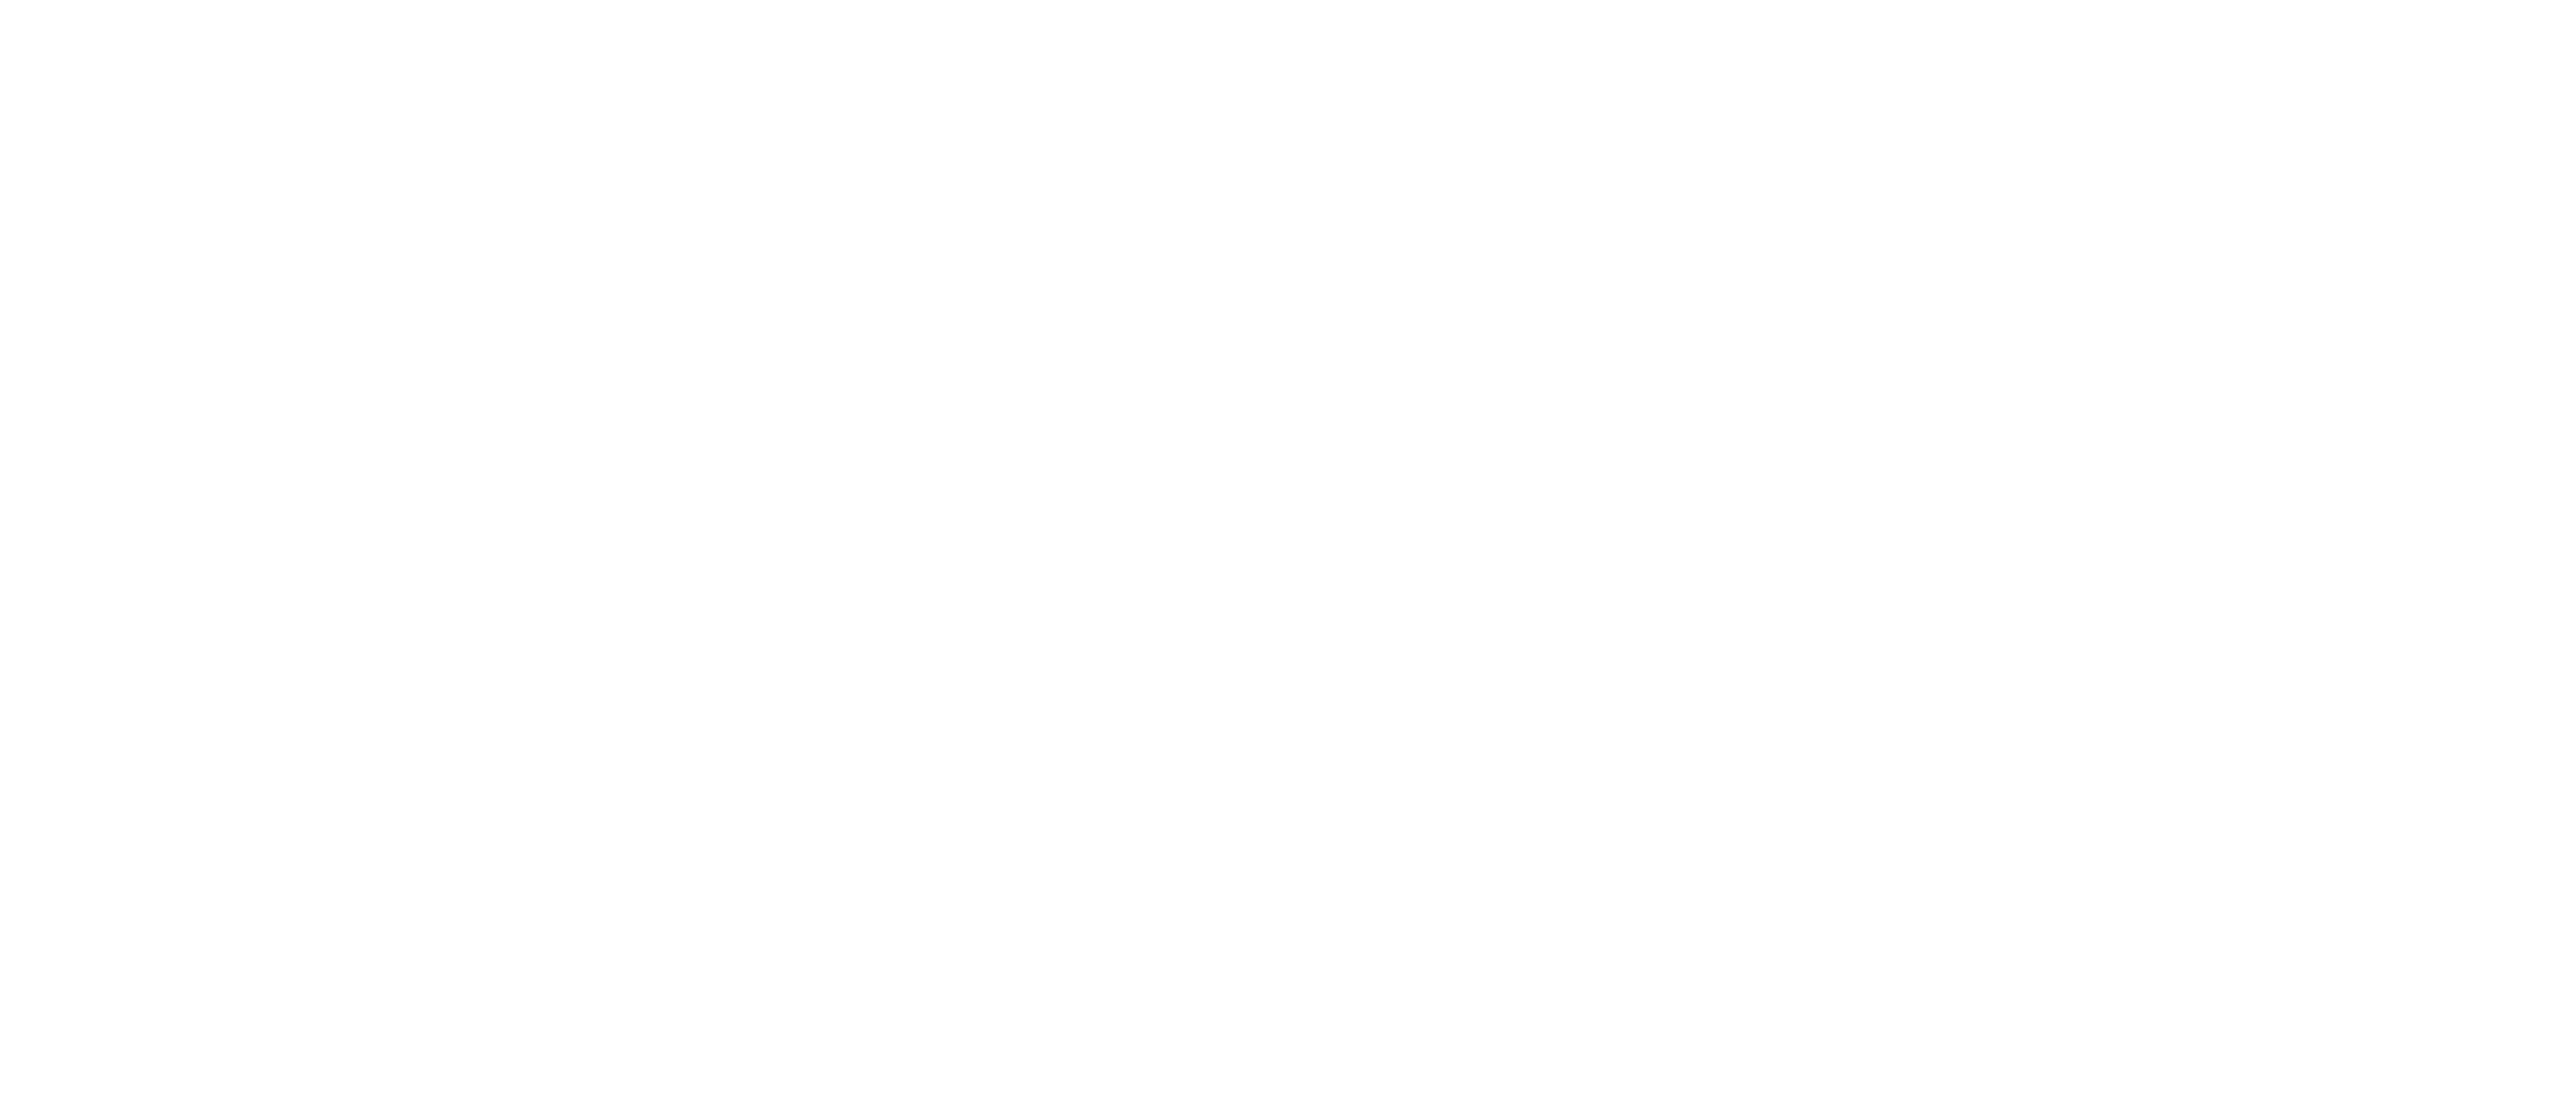 Hobbicool